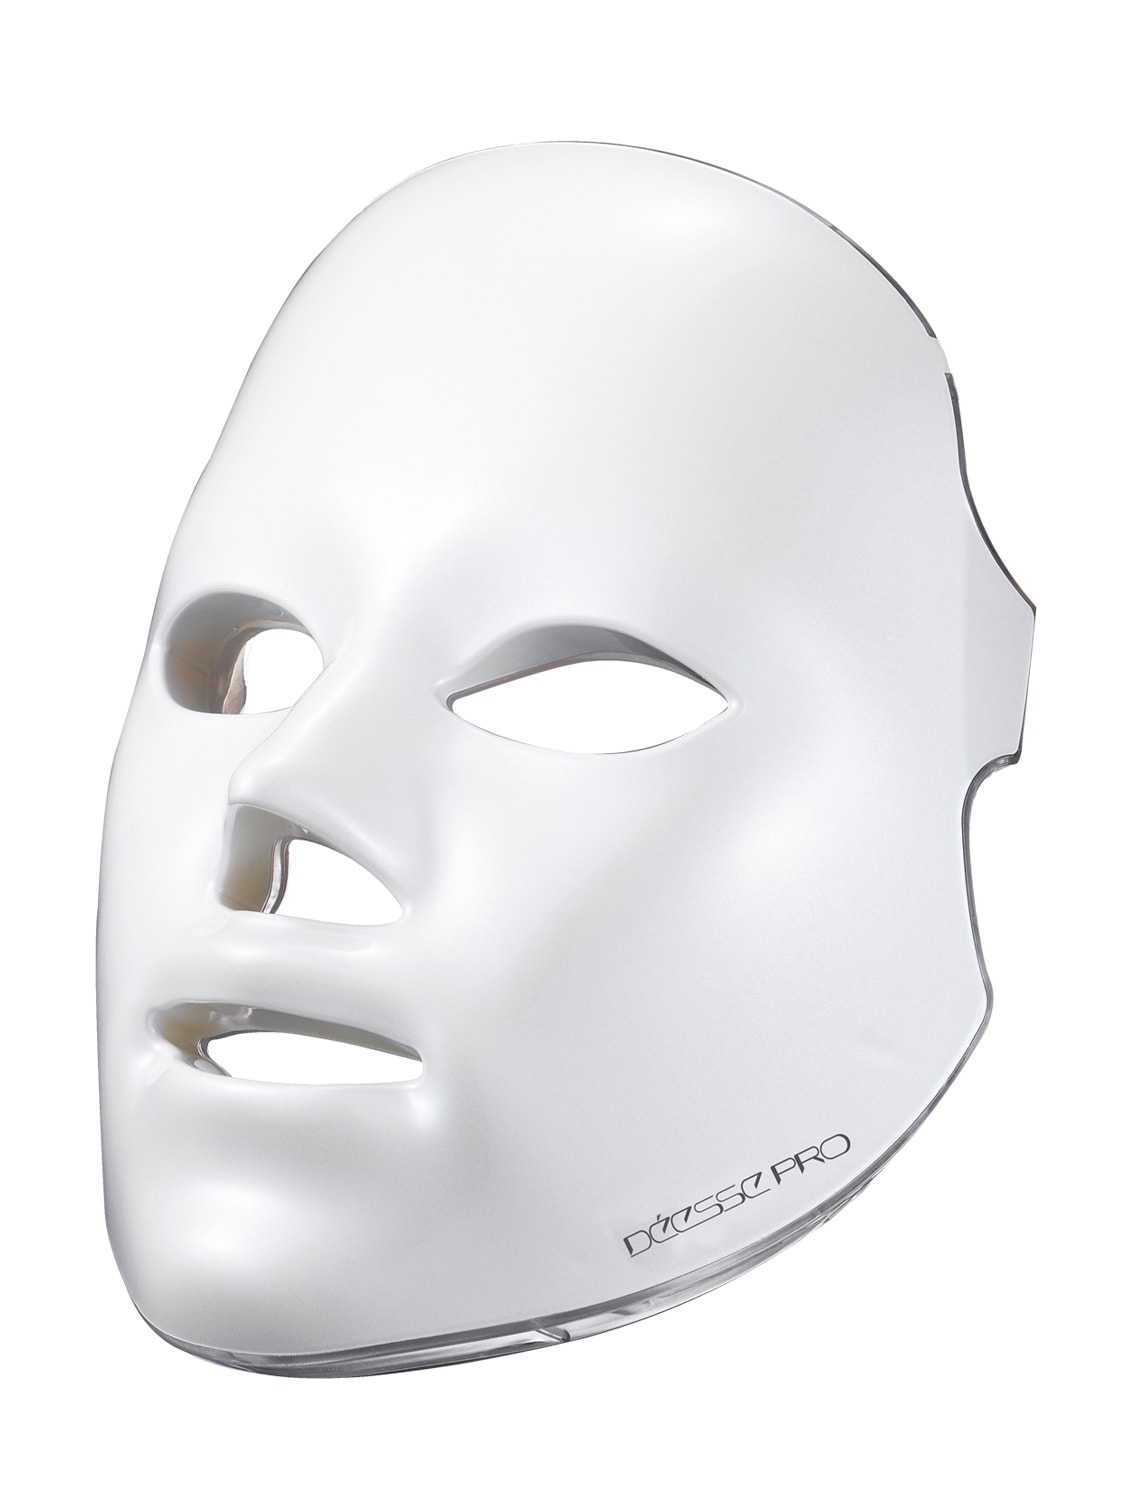 Image of Déesse Pro Led Phototherapy Mask